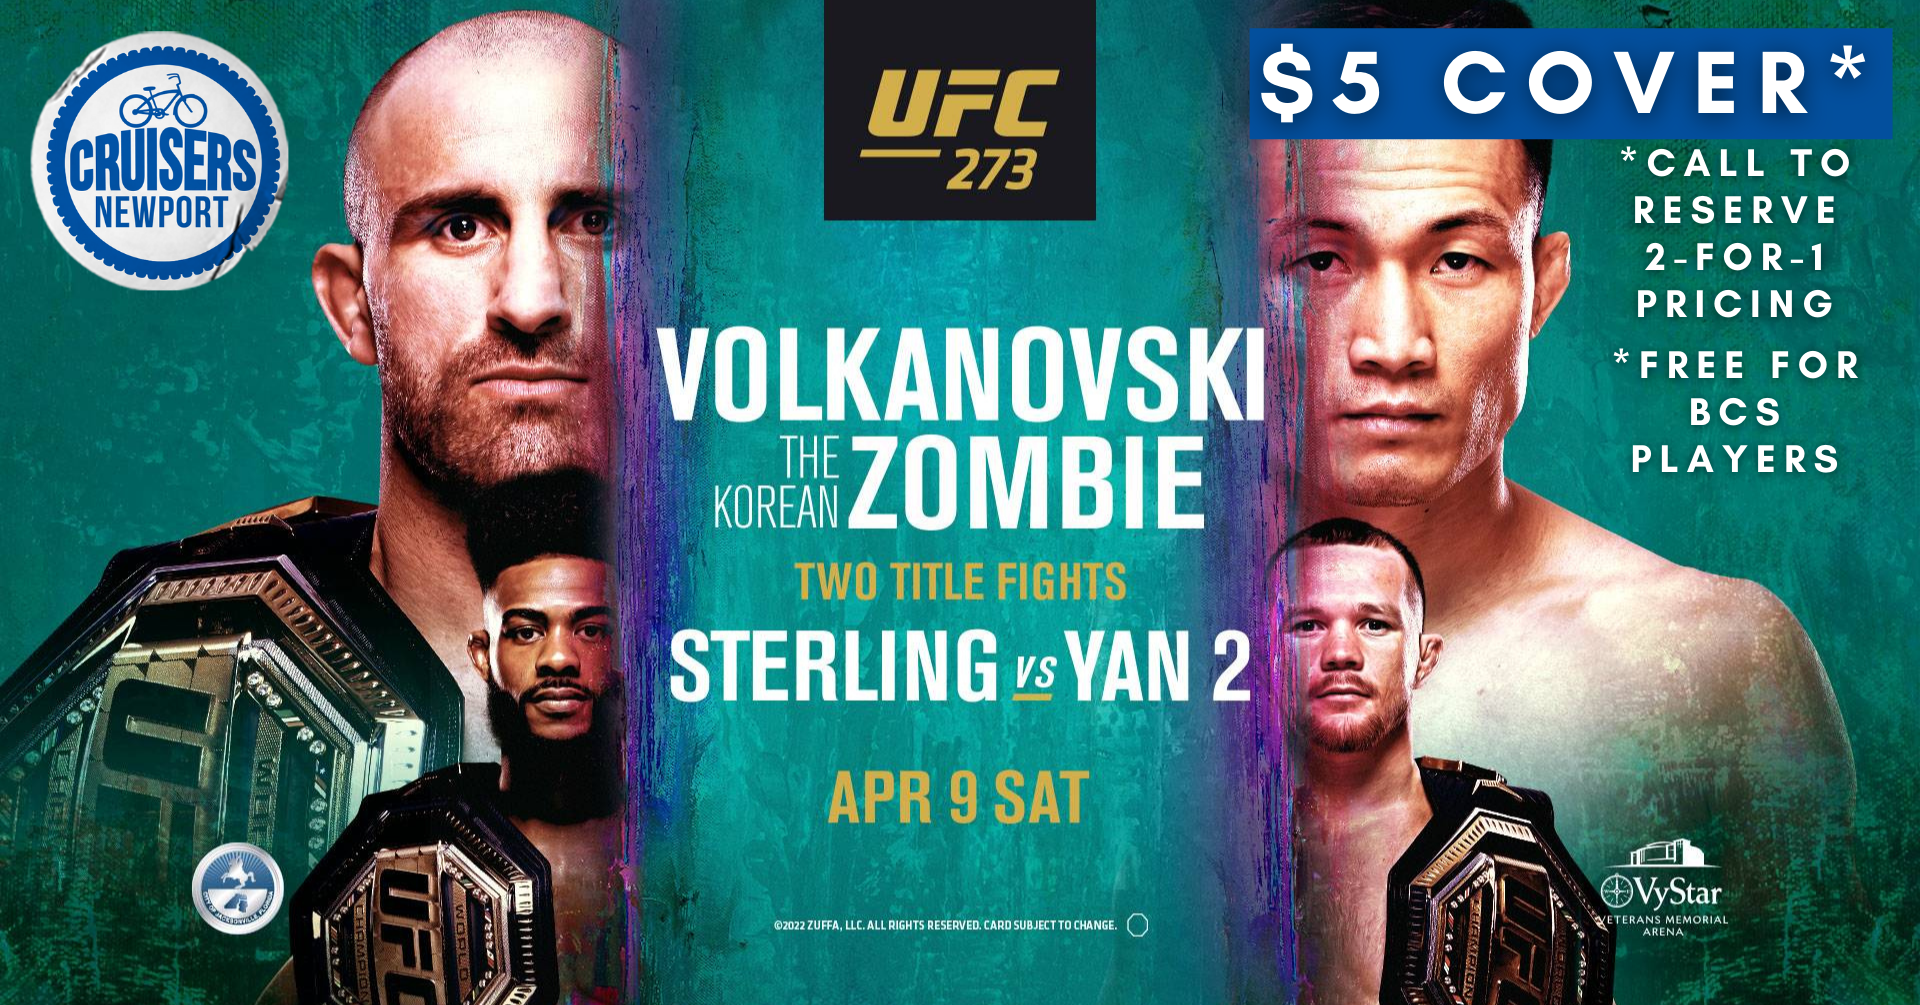 UFC 273 VOLKANOVSKI VS THE KOREAN ZOMBIE Cruisers Newport Beach - Cruisers Pizza Bar Grill